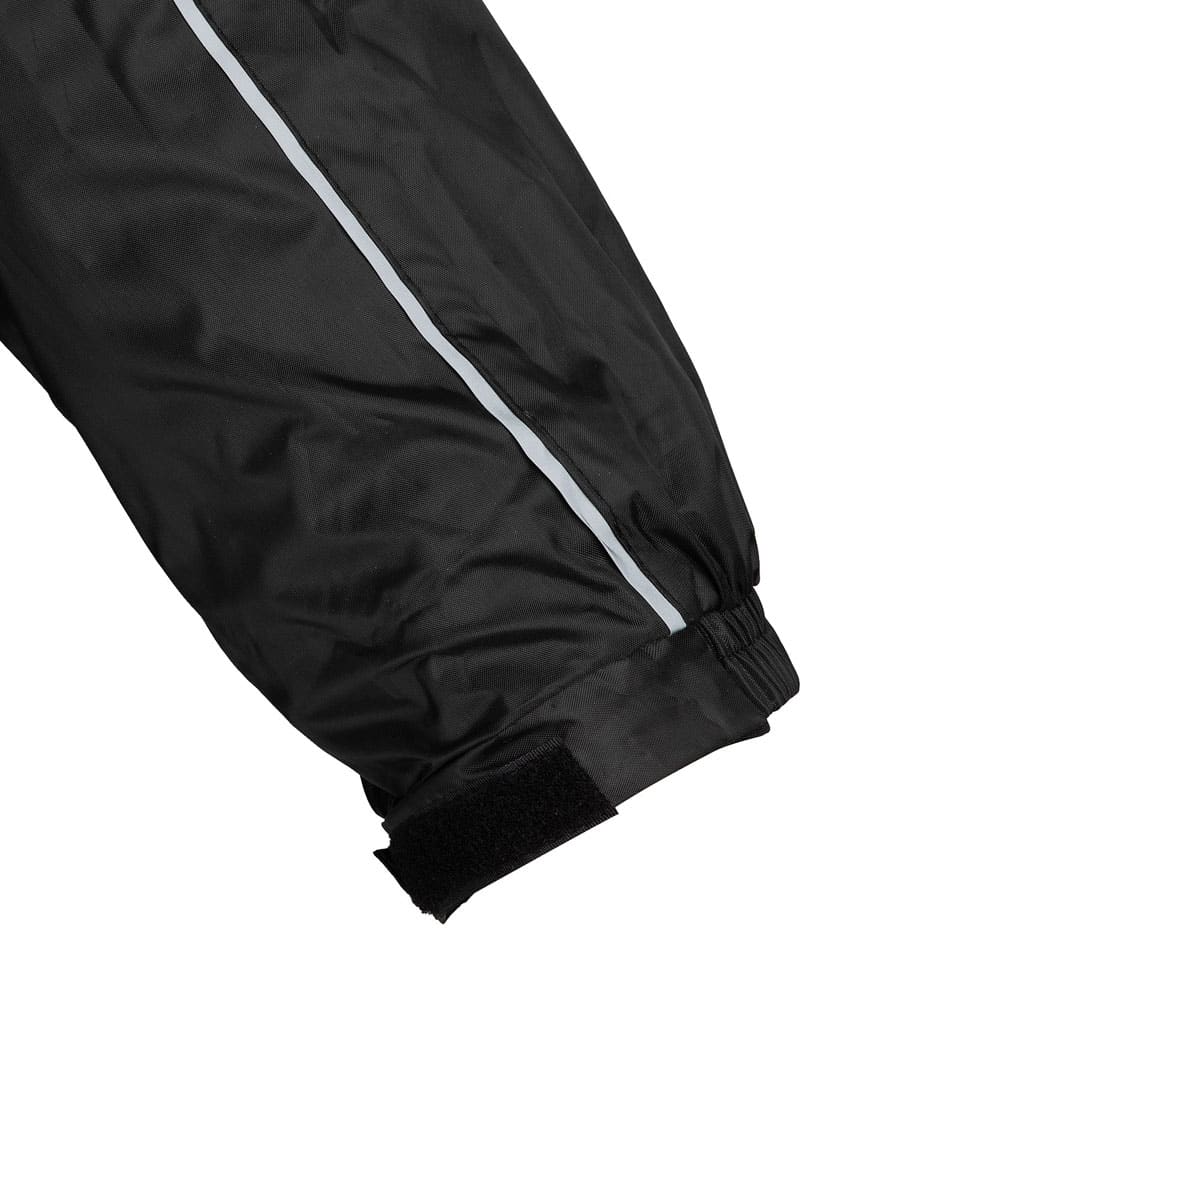 Oxford Rainseal Over Suit WP - Black wrist detail